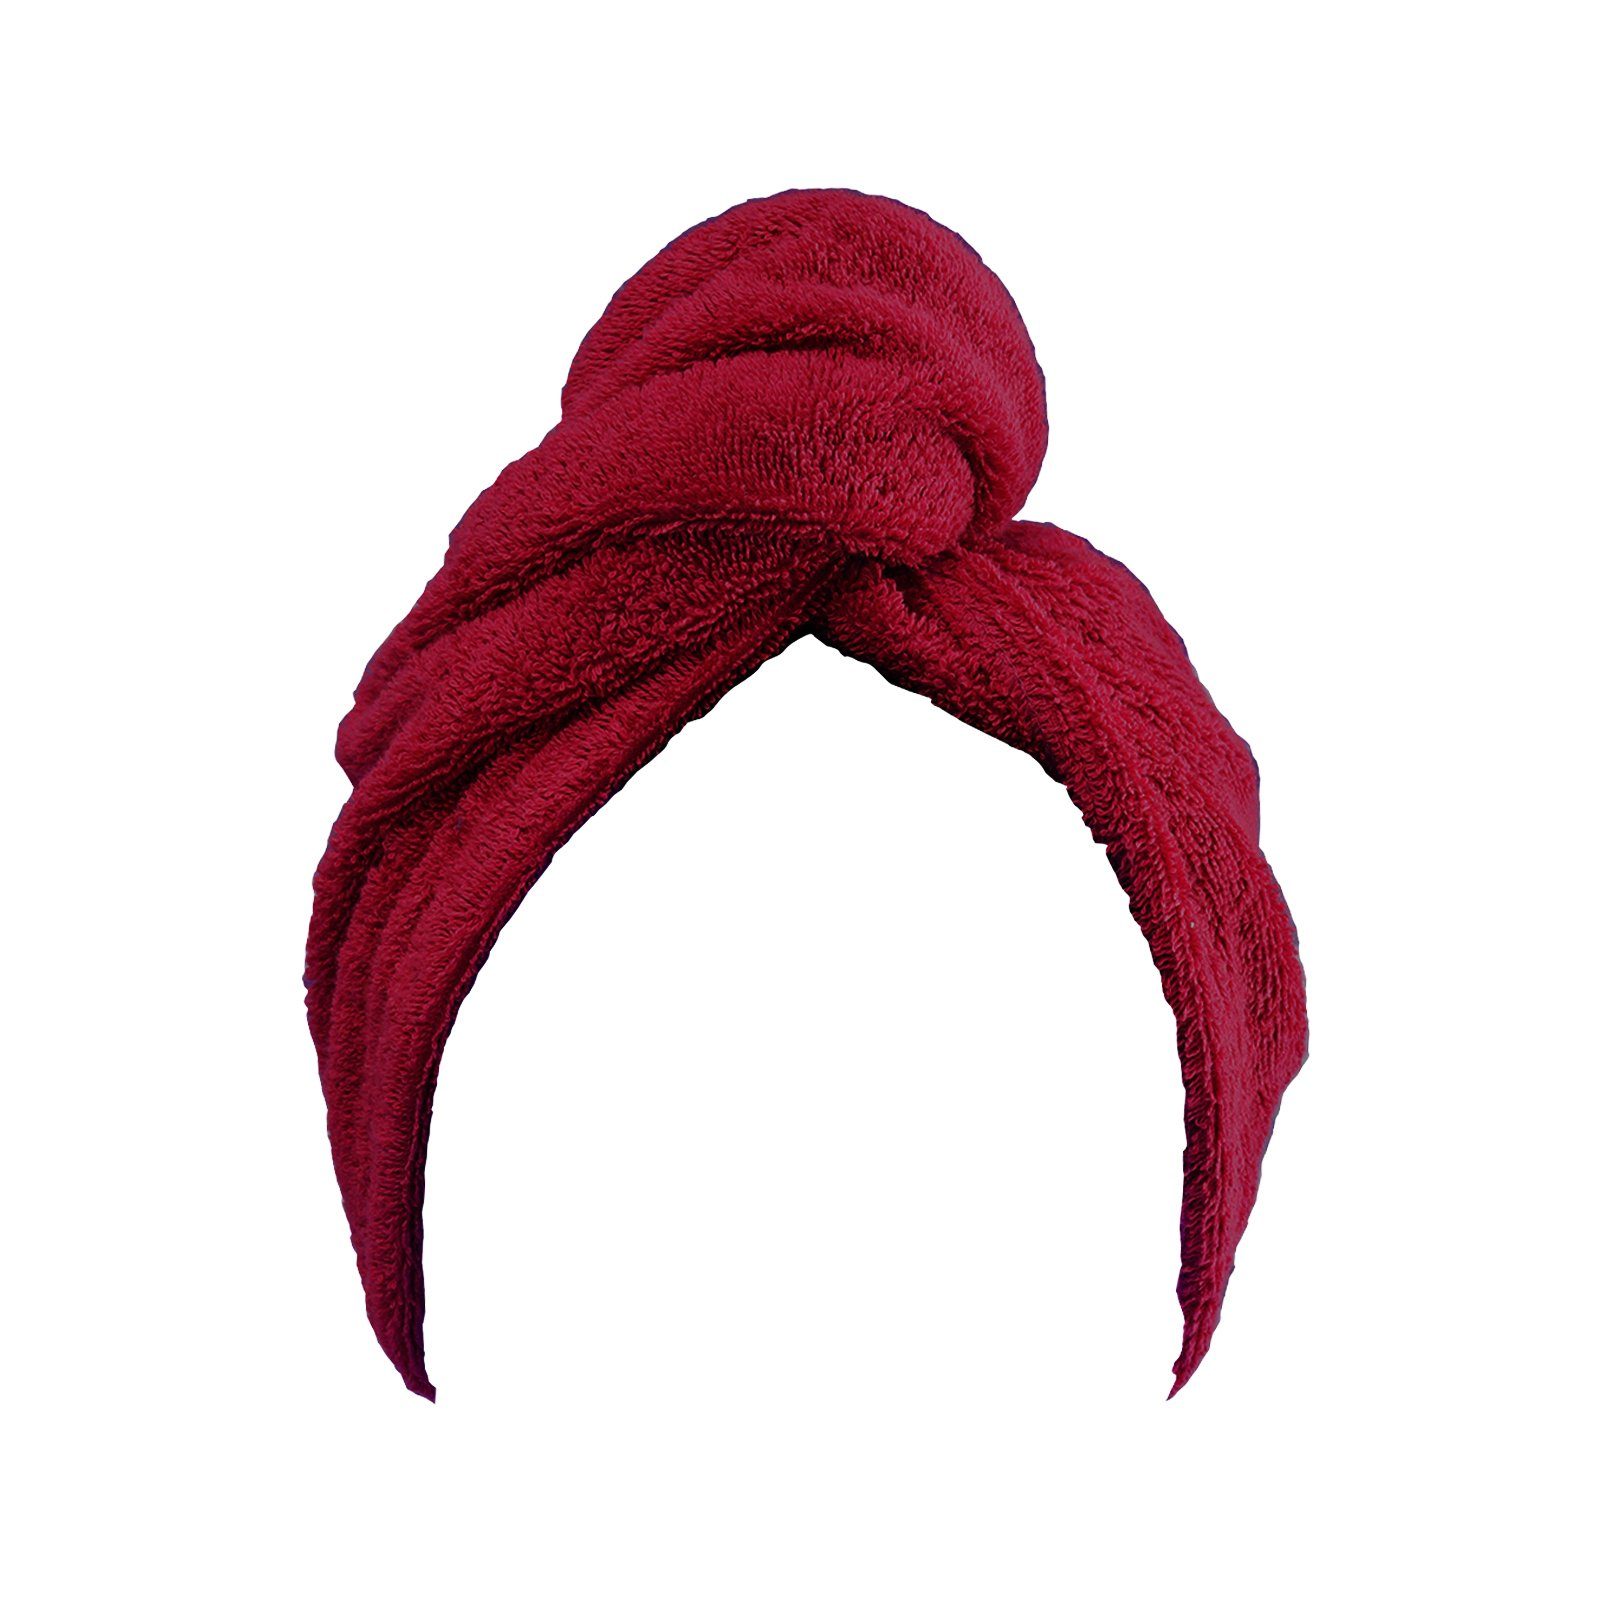 CLASS HOME COLLECTION Turban-Handtuch Baumwolle Haar-Turban cm 72x27 Frottee Bordeaux Kopfhandtuch